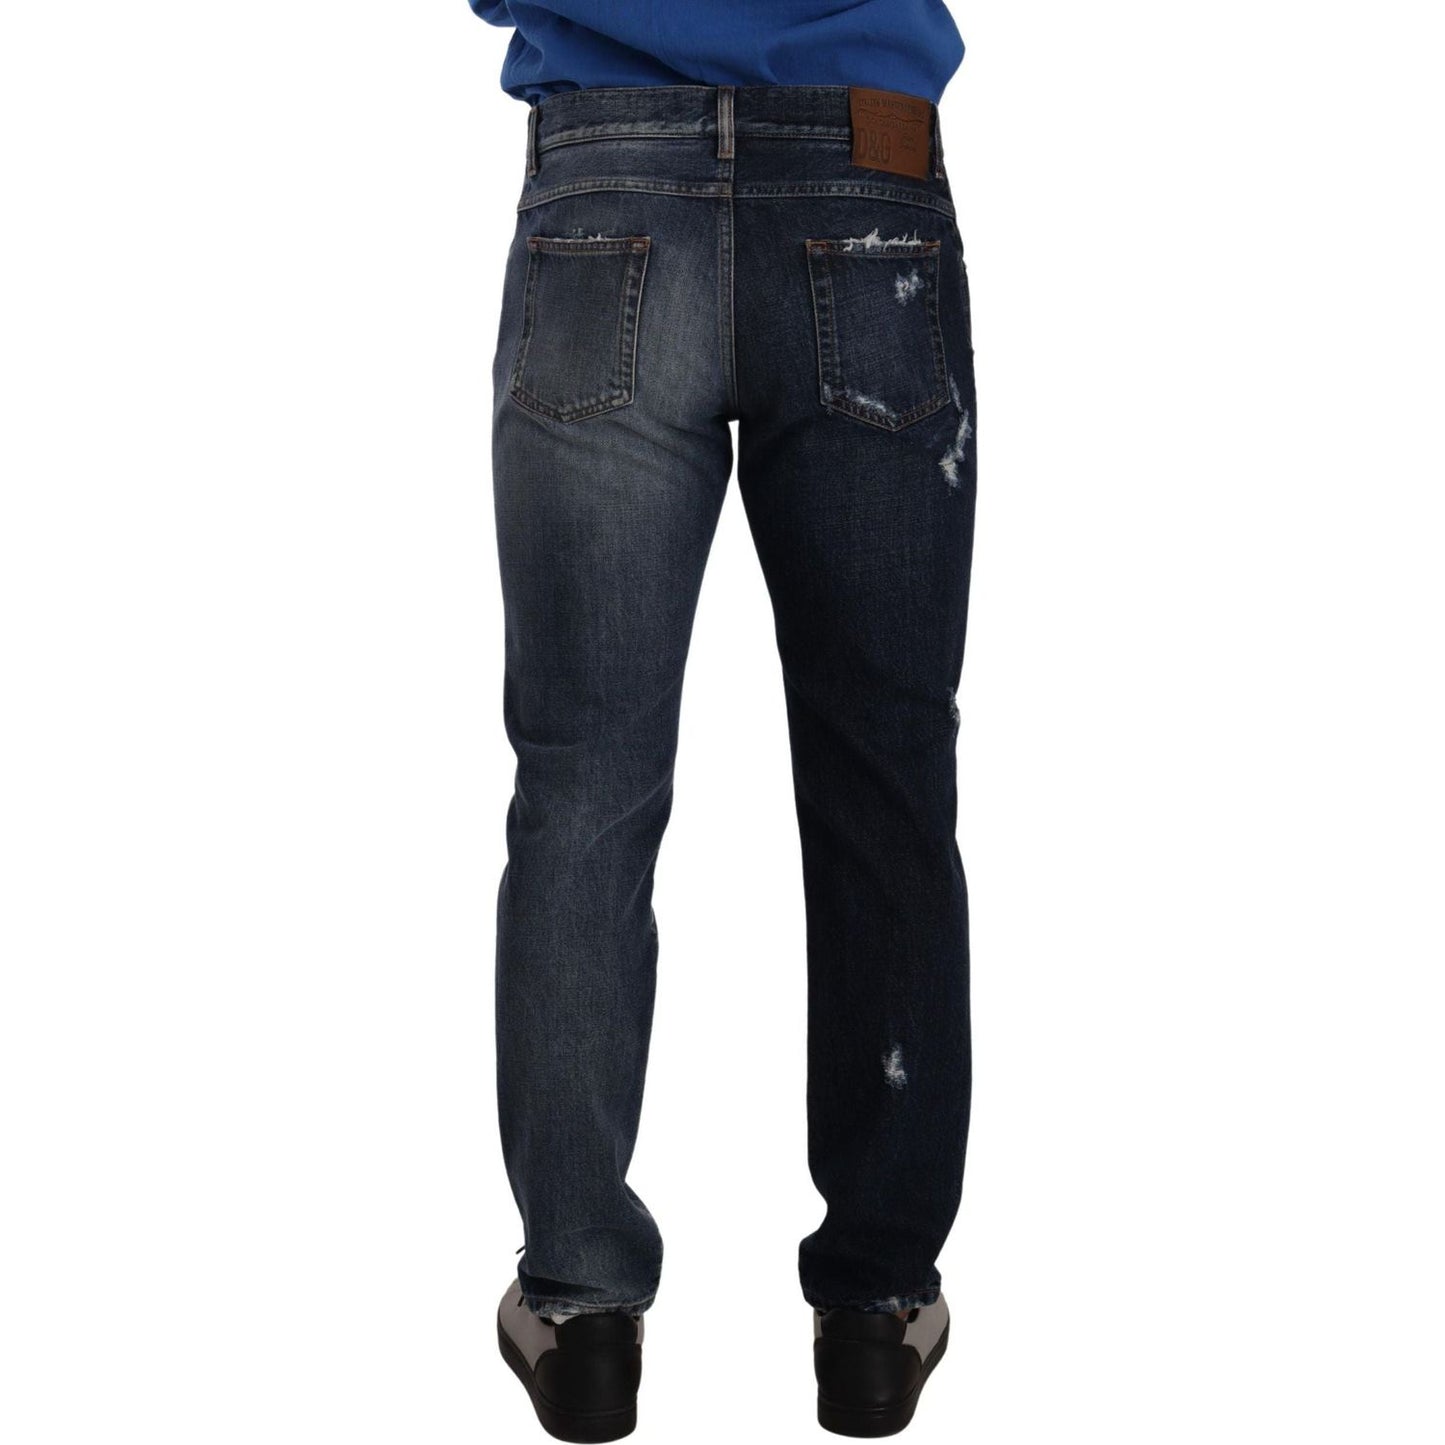 Dolce & Gabbana Chic Tattered Denim Jeans blue-cotton-regular-denim-trousers-jeans IMG_7049-scaled-111147fd-af0.jpg